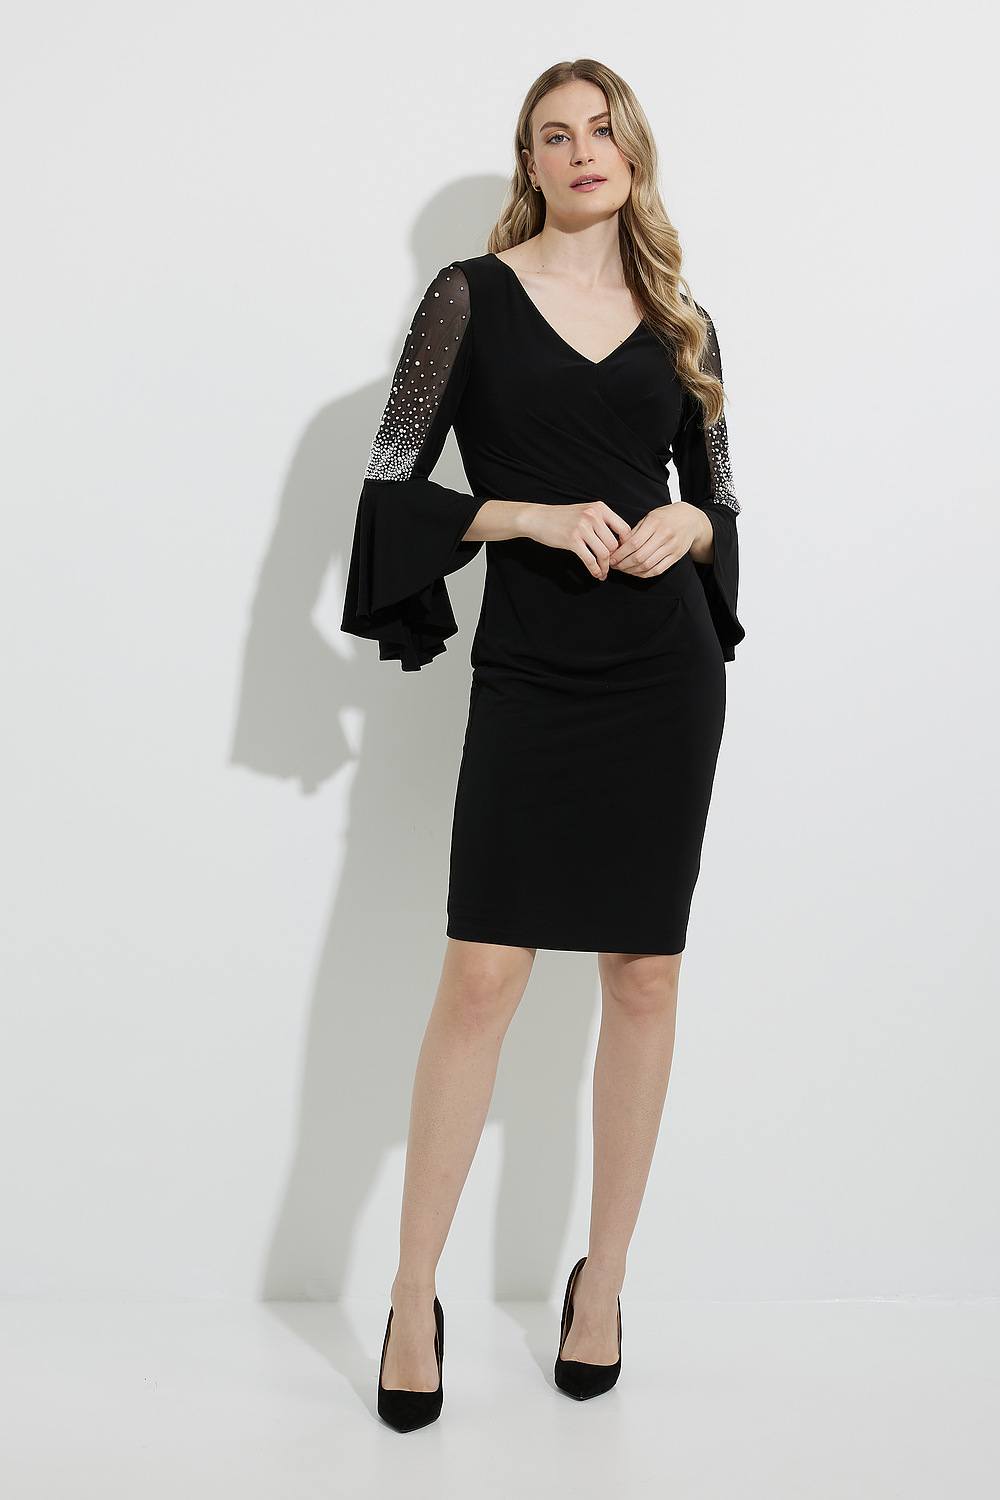 Joseph Ribkoff Sheer & Ruffle Dress Style 224005. Black